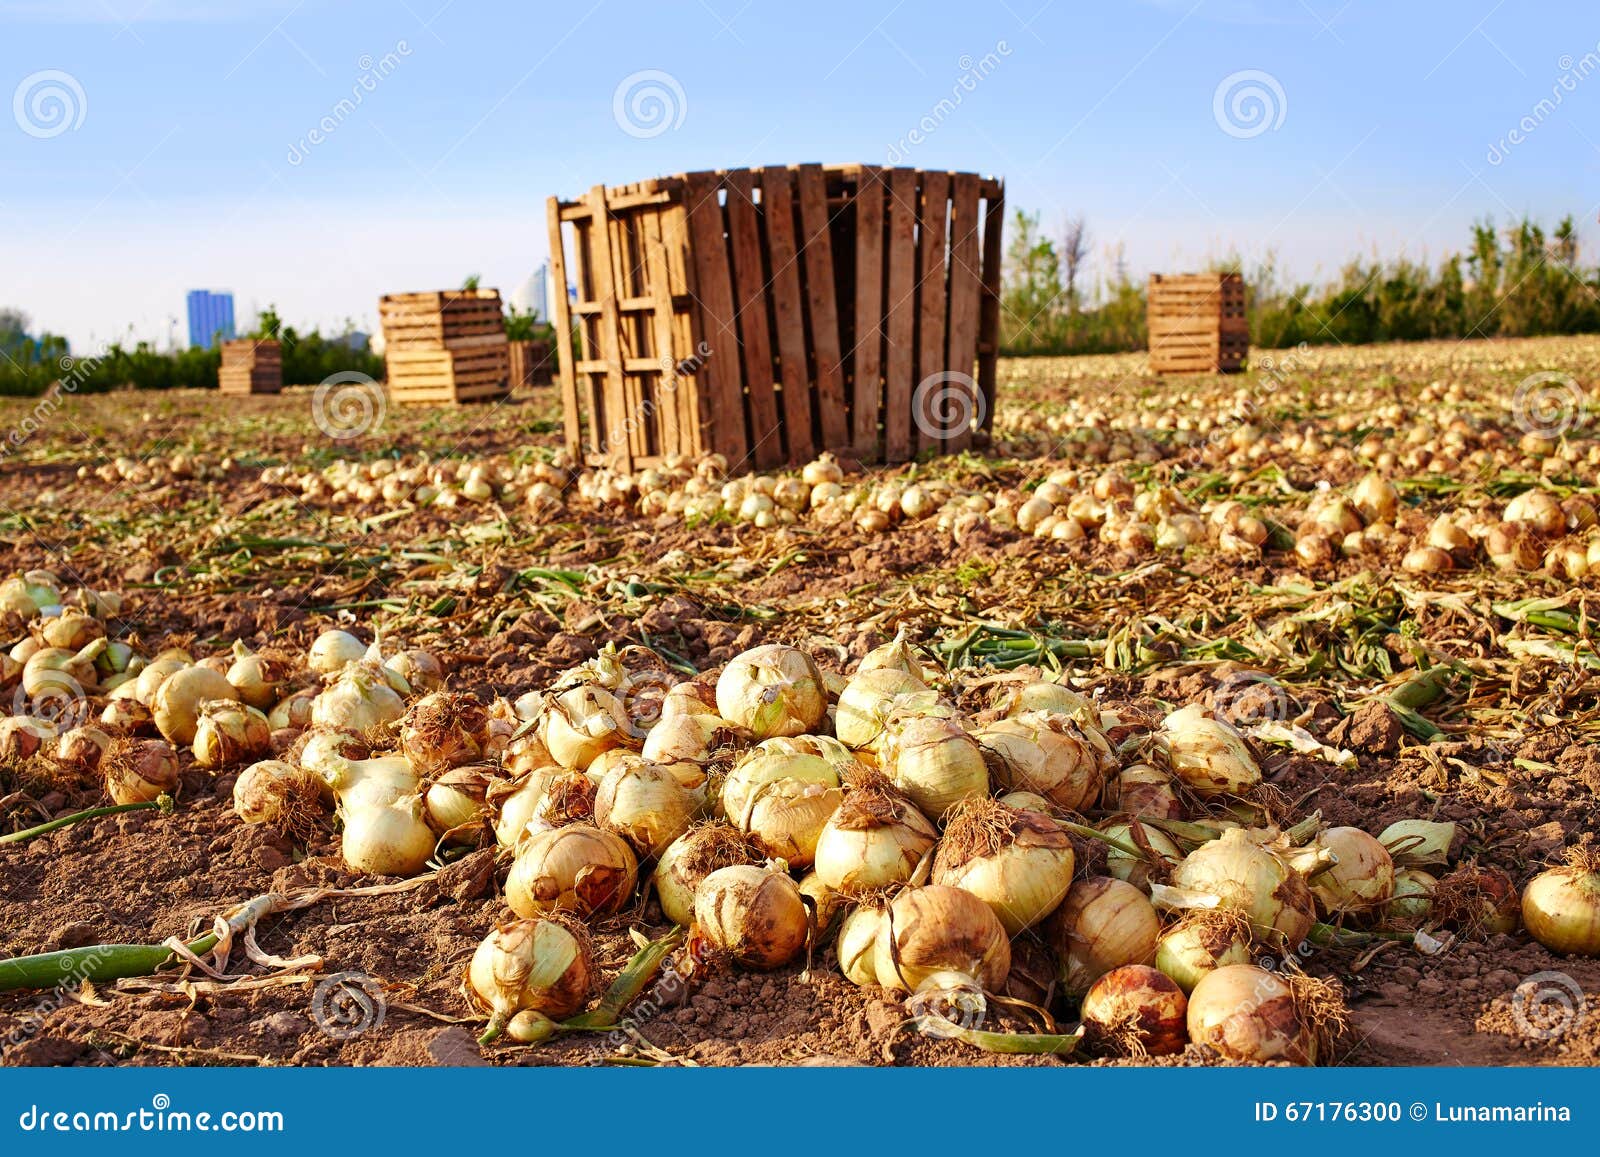 onion harvest in valencia spain huerta